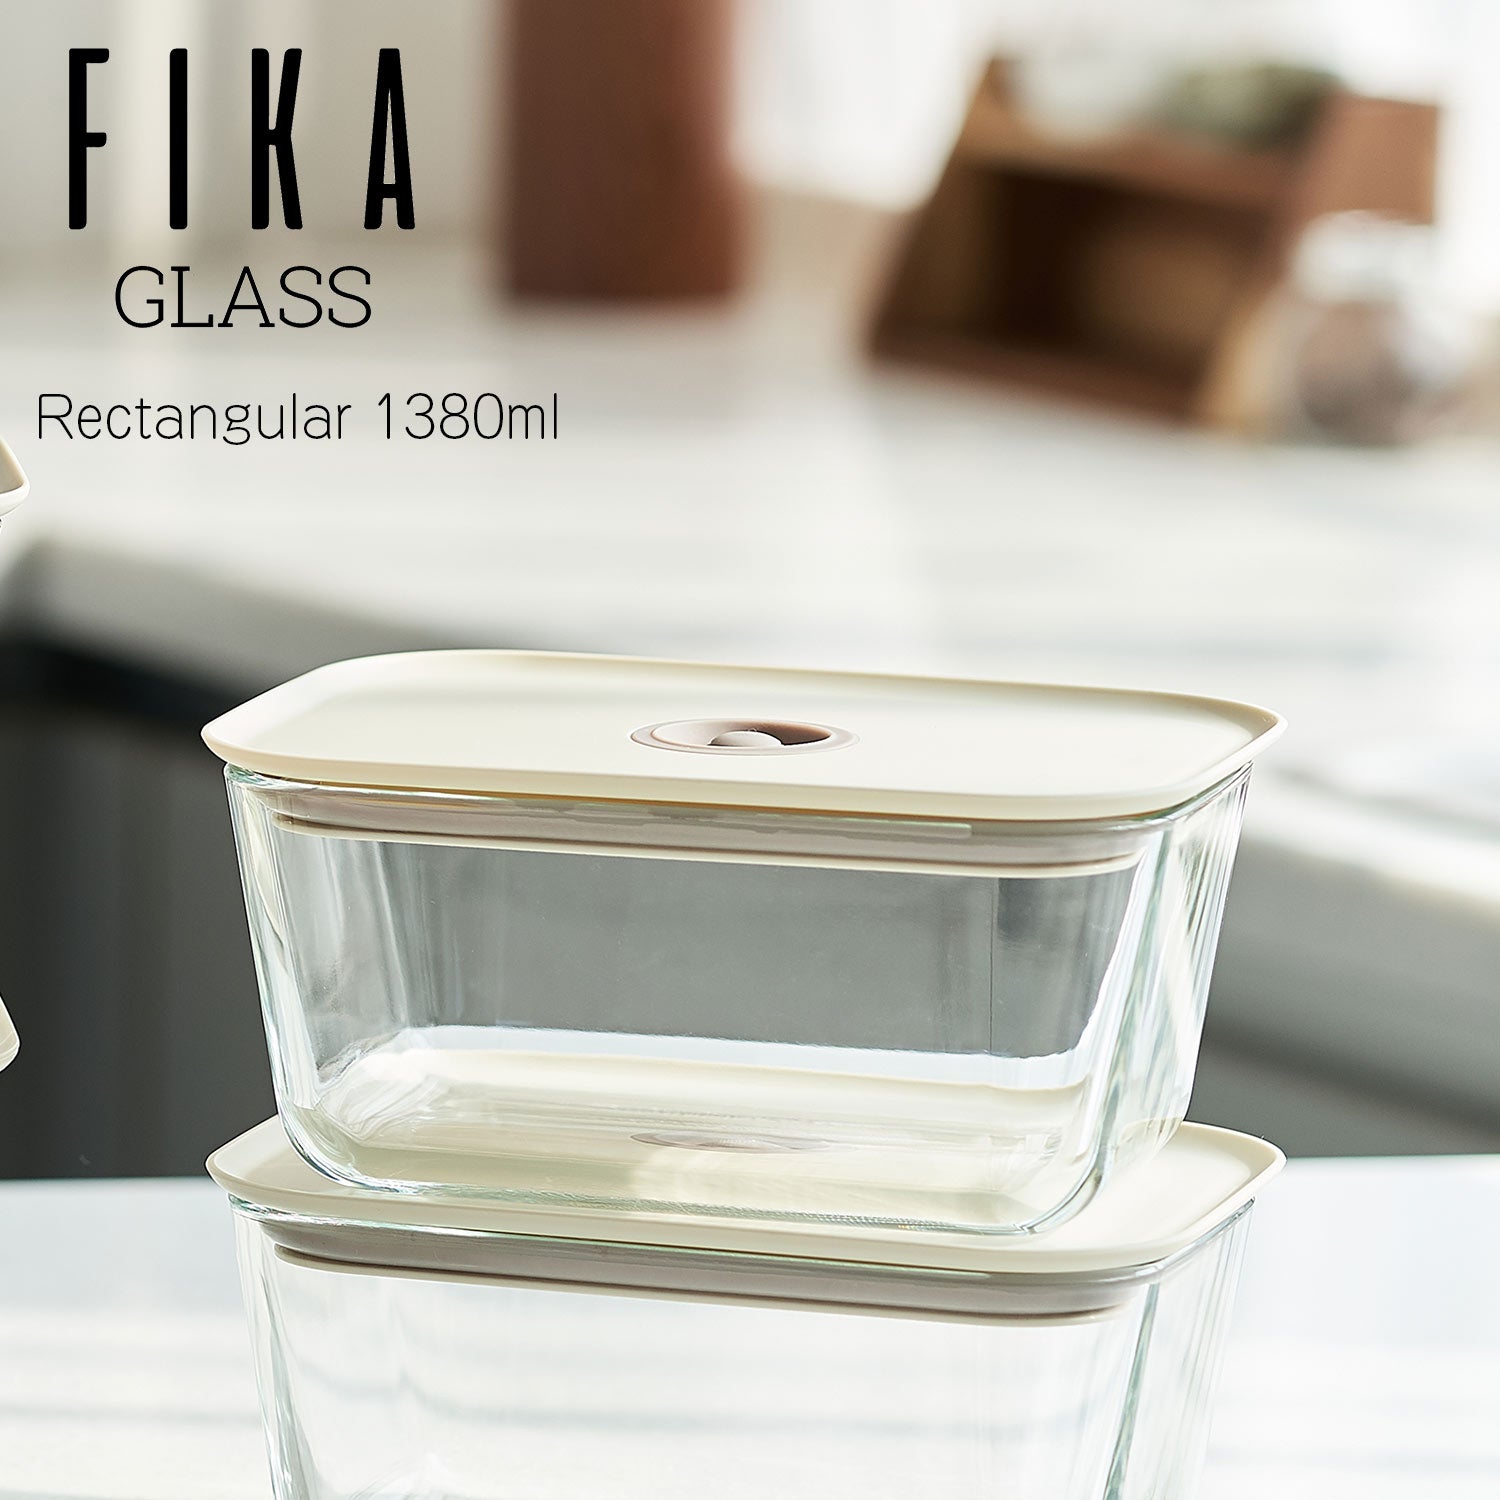 Set of 3) NEOFLAM FIKA Clik Glass Food Storage Set, Microwave, Oven Safe